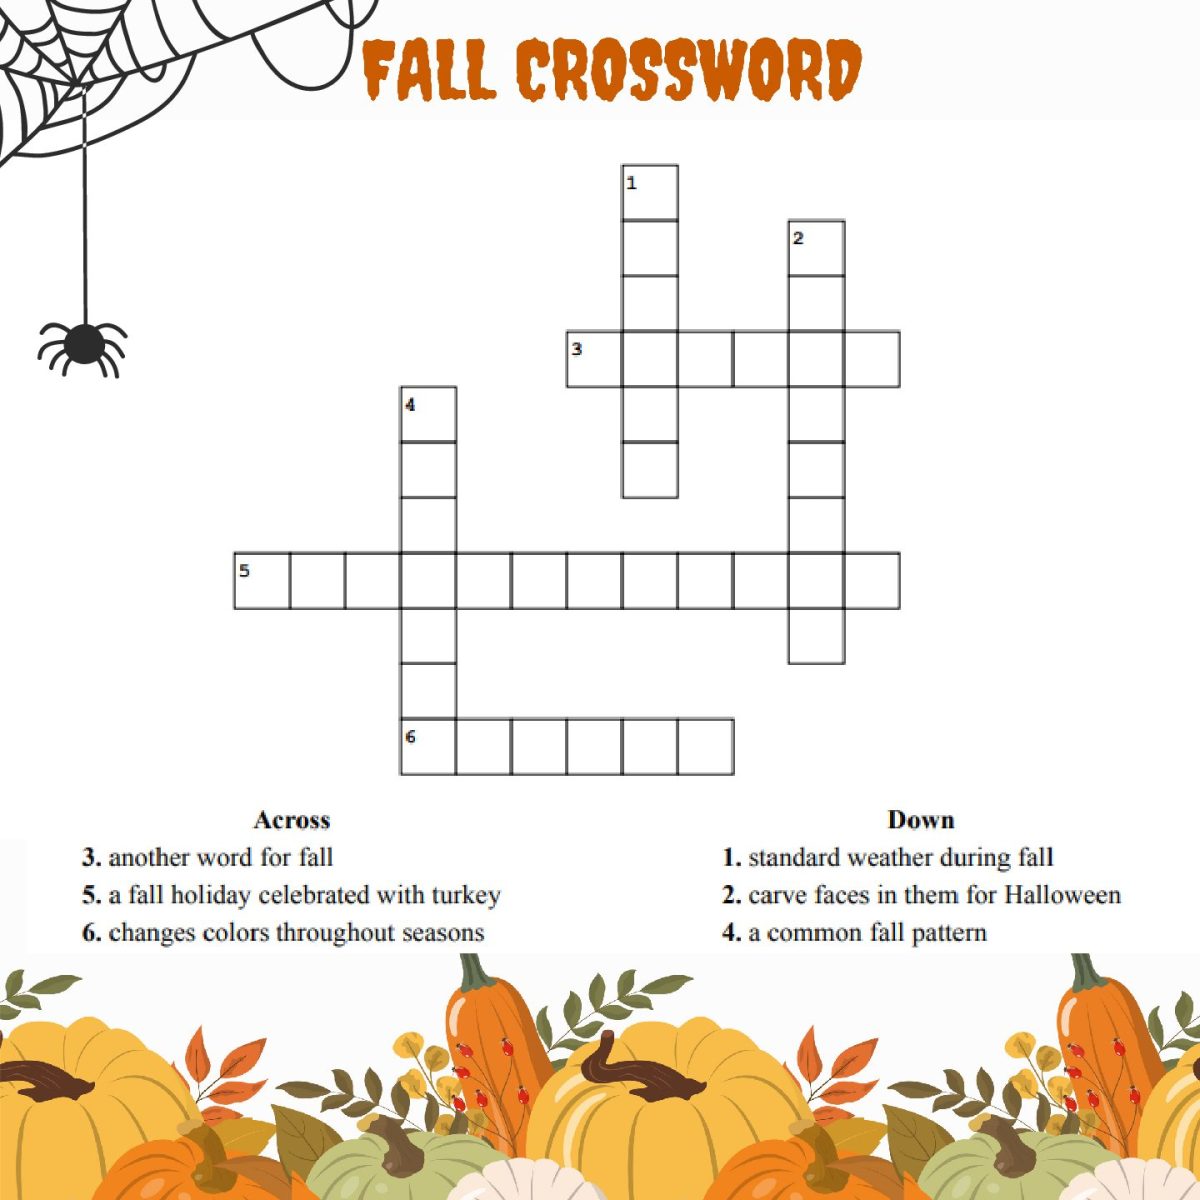 Fall+crossword